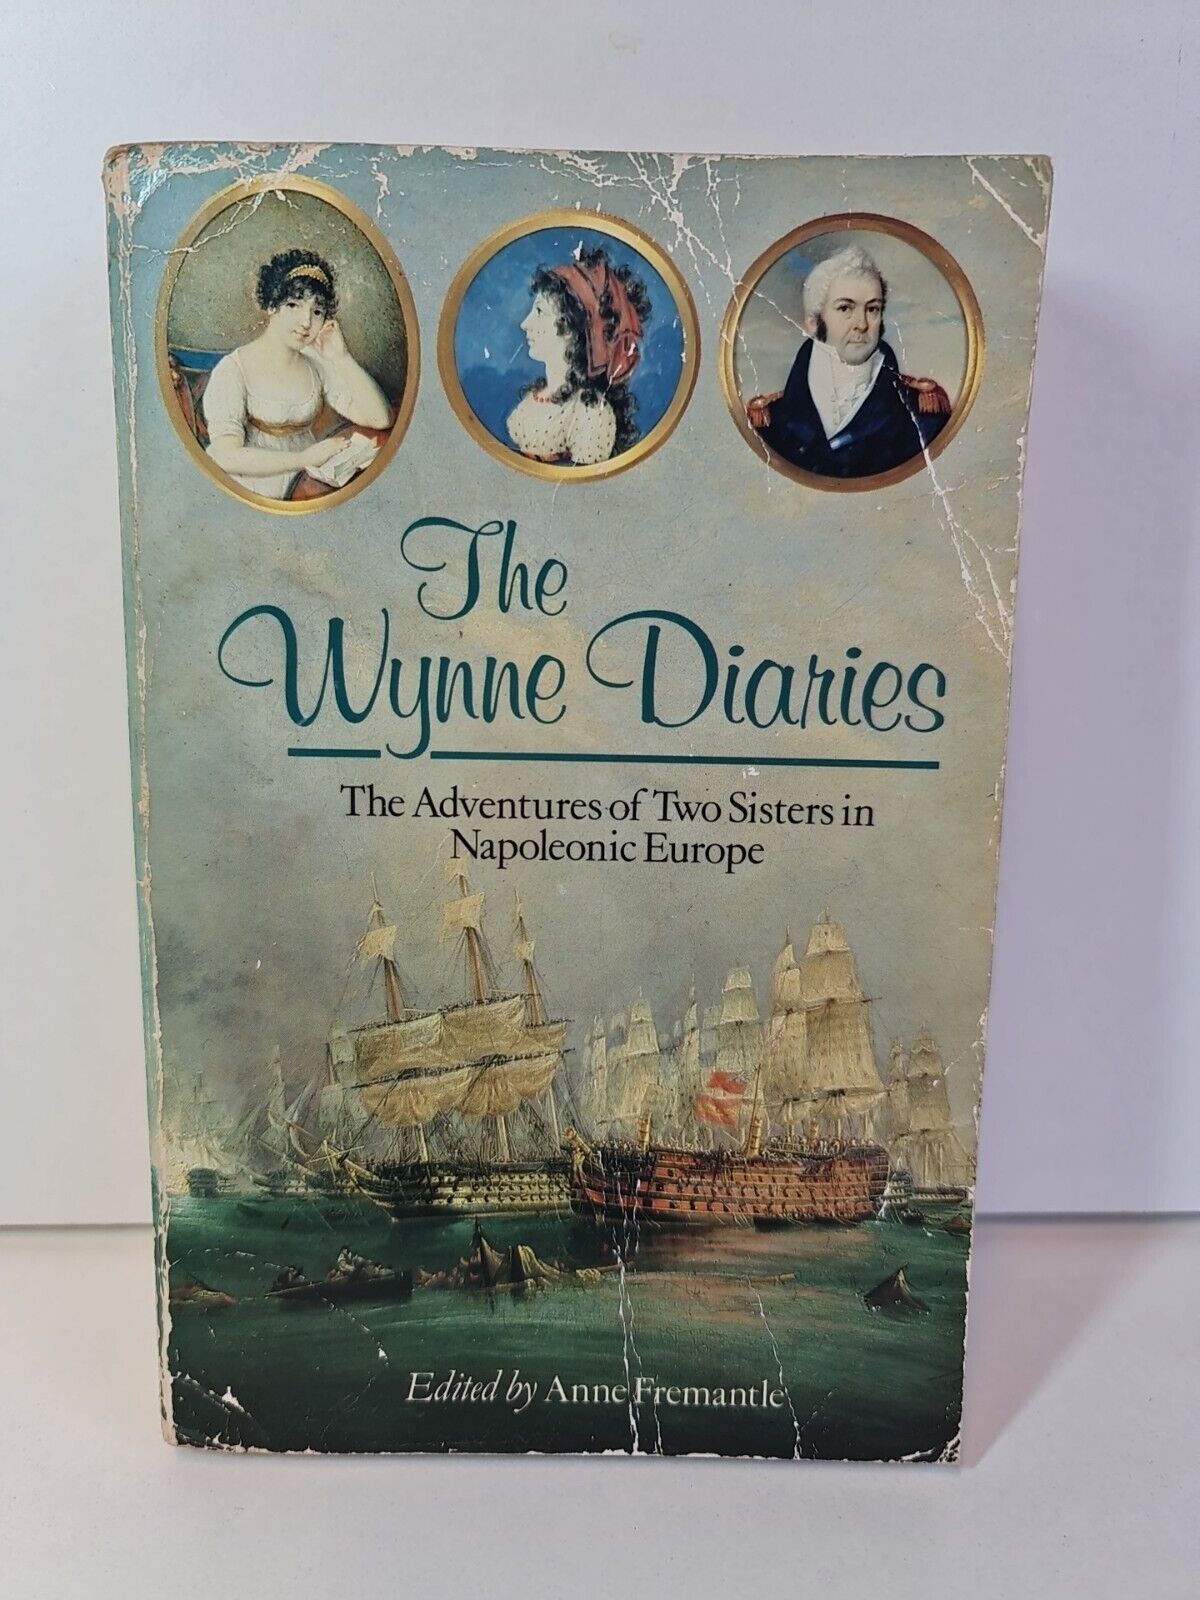 The Wynne Diaries eds. Anne Fremantle ( 1982)